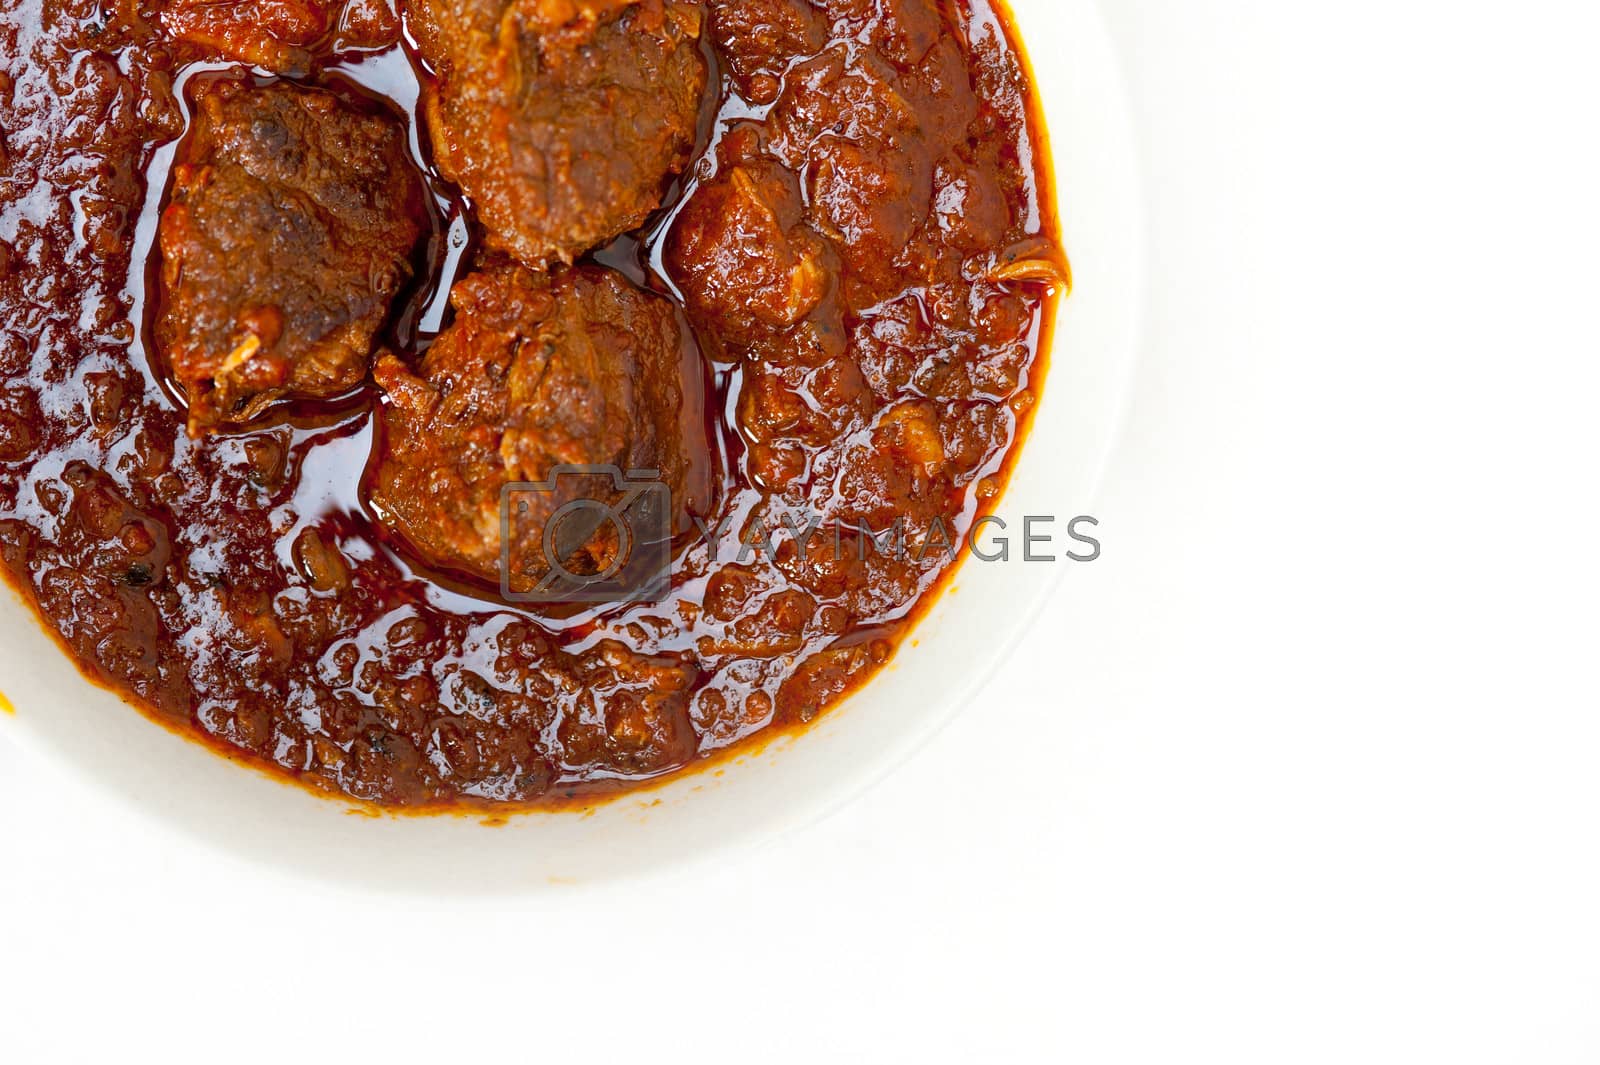 Royalty free image of neapolitan style ragu meat sauce by keko64